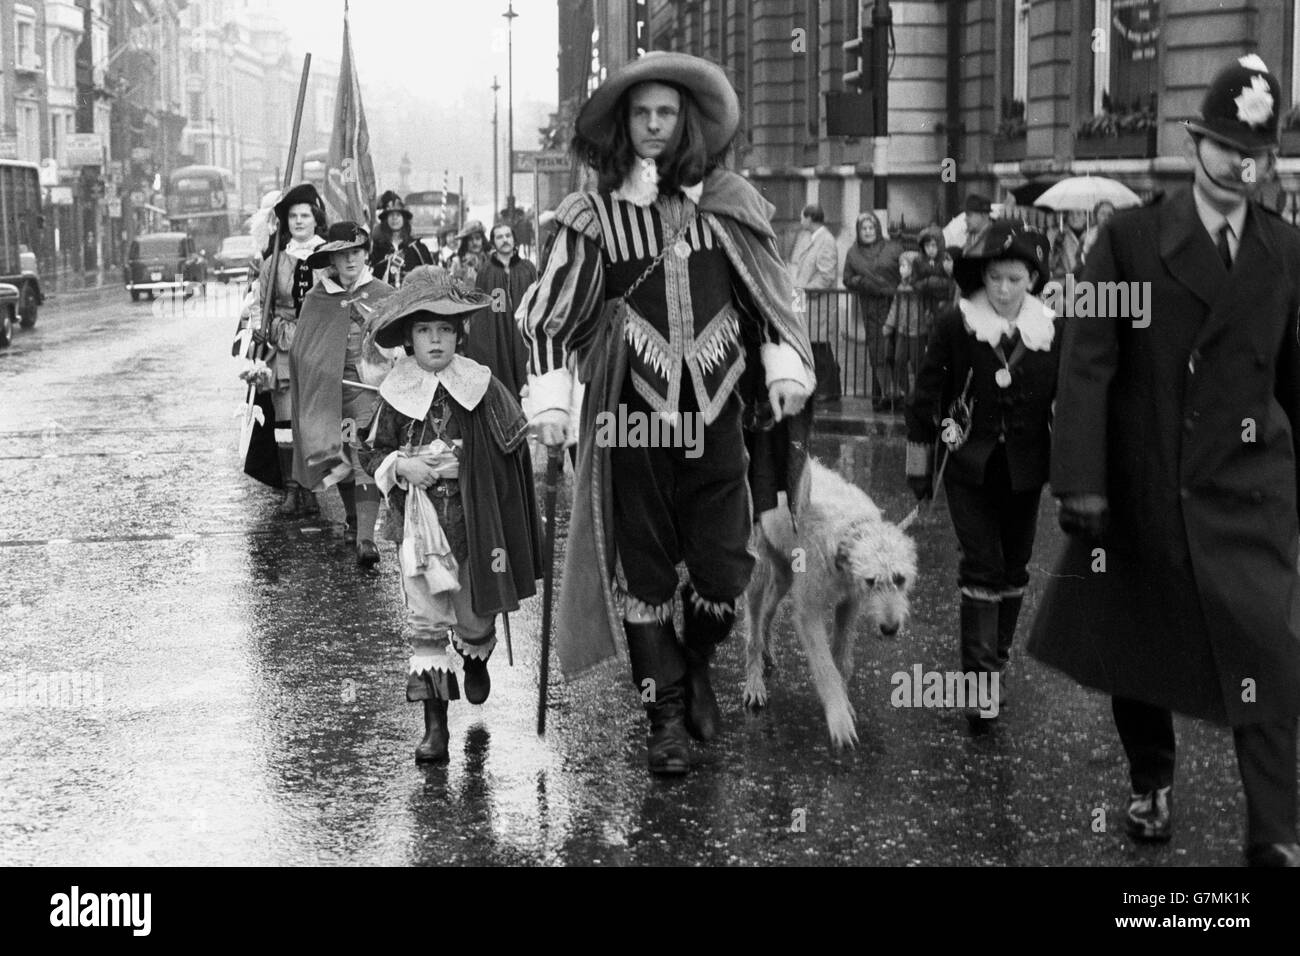 Coutumes et traditions - la mort de Charles I - La société Hogan-vexel - Londres Banque D'Images